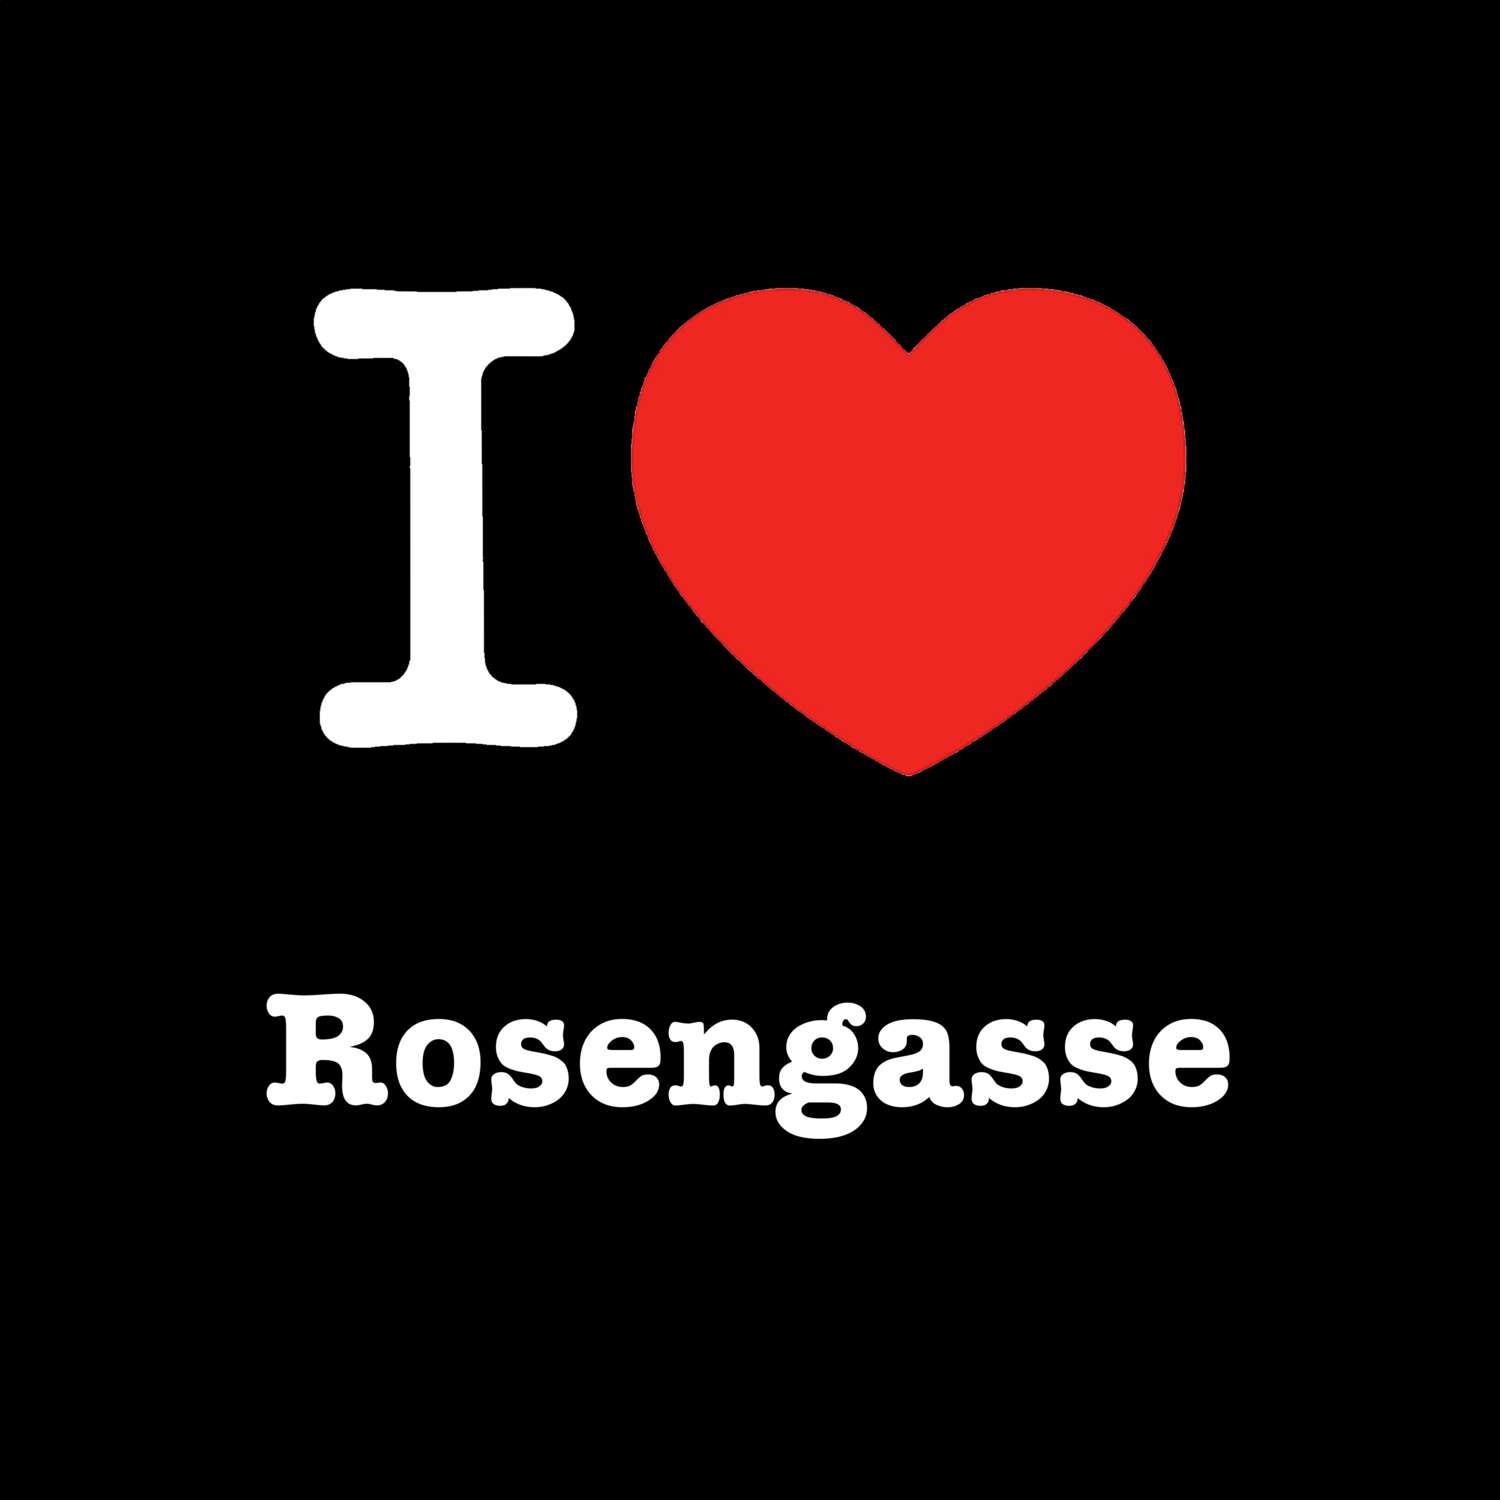 Rosengasse T-Shirt »I love«